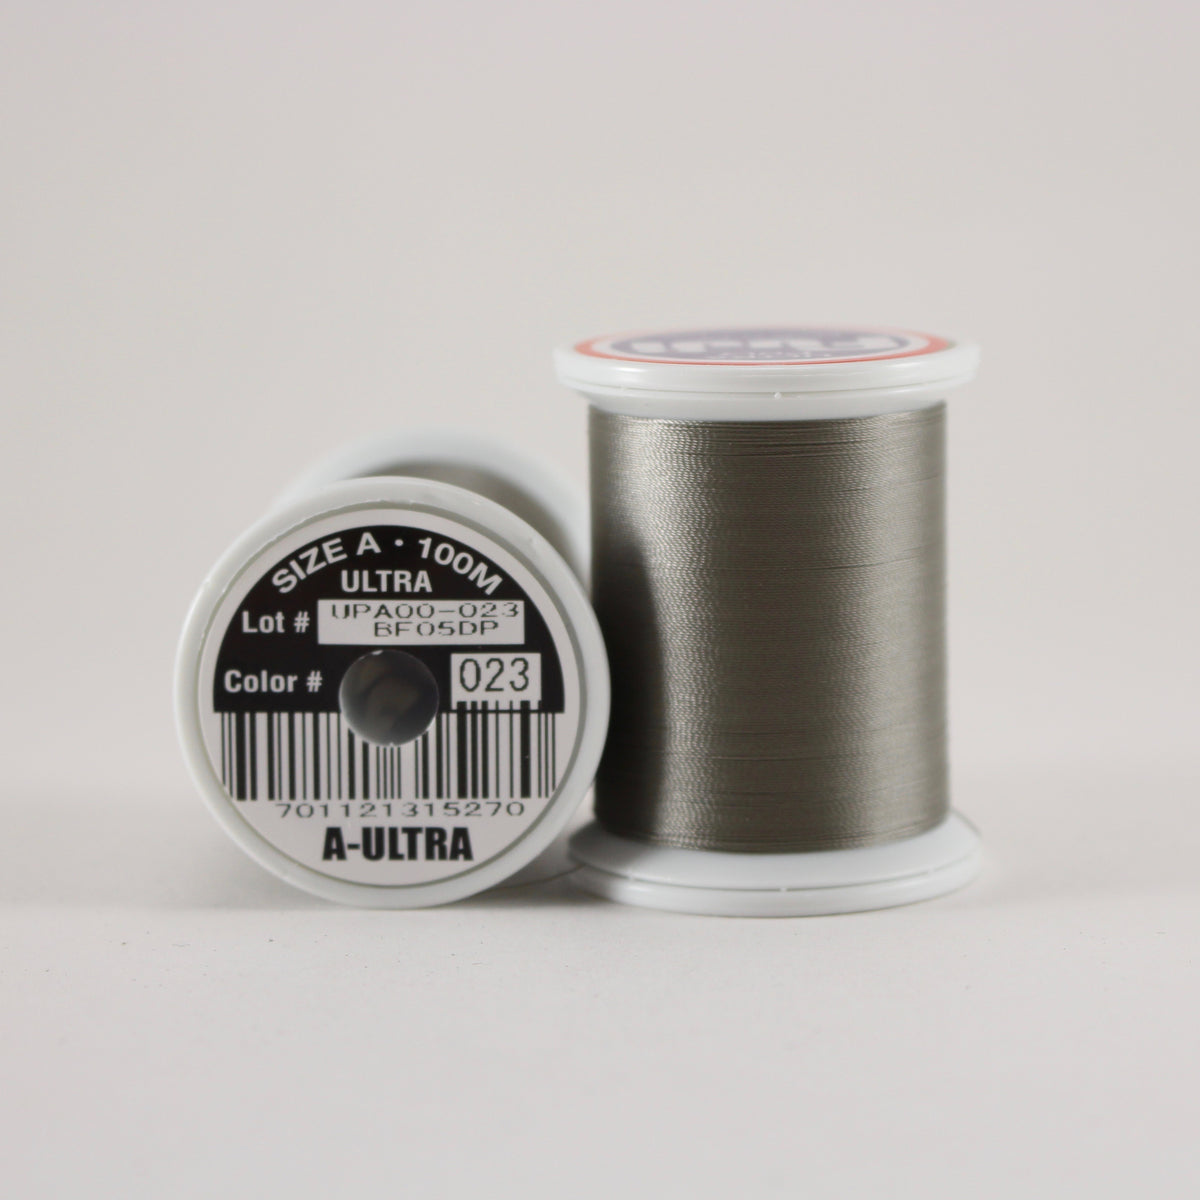 Fuji Ultra Poly rod wrapping thread in Garnet #007 (Size A 100m spool)